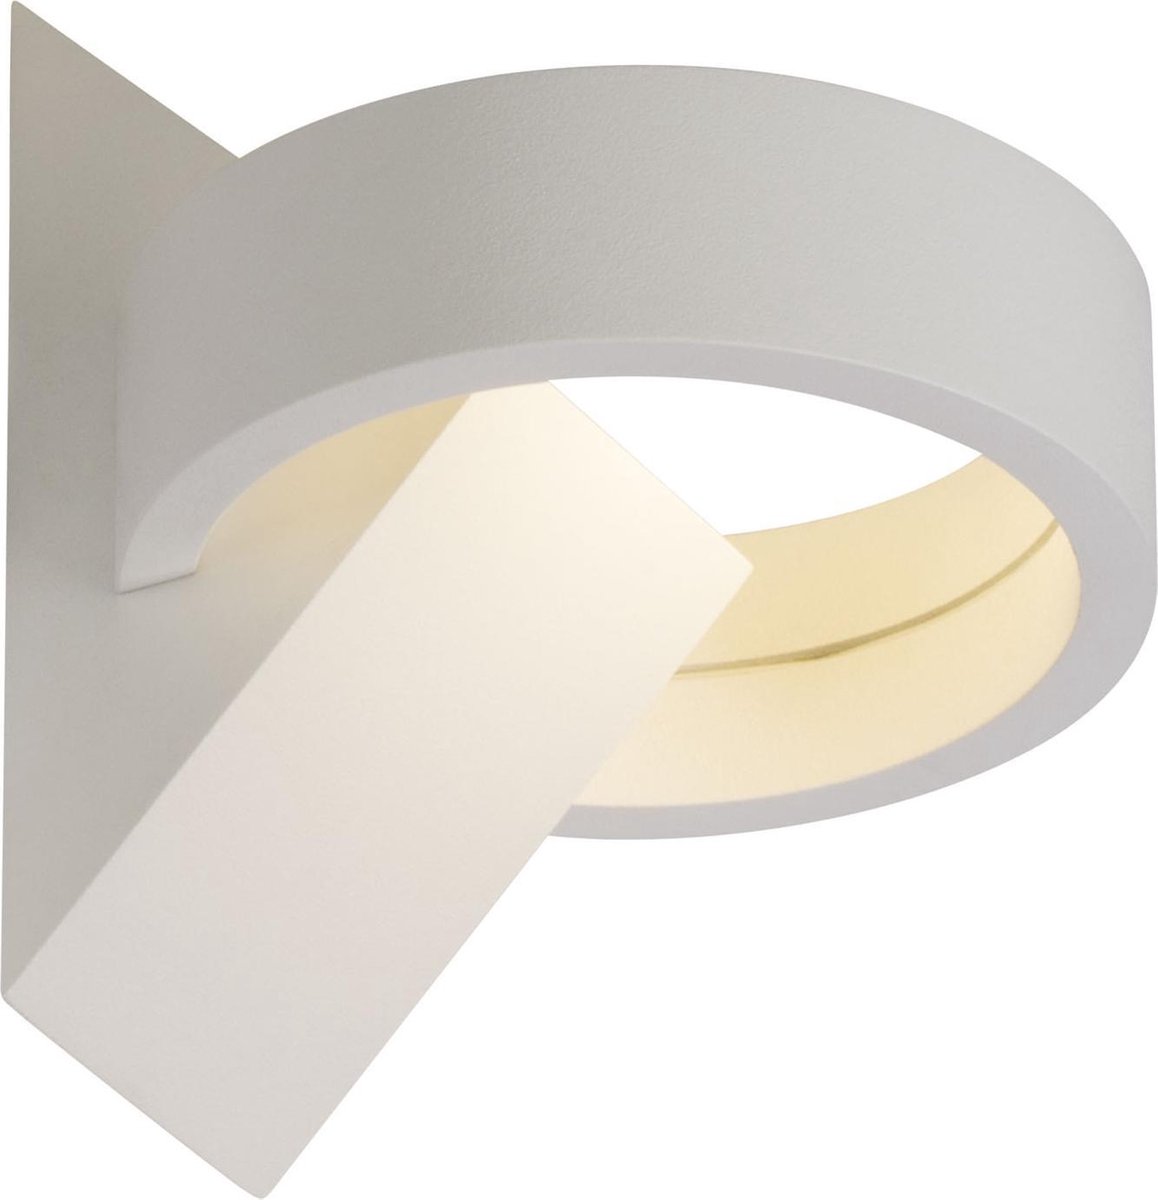 AEG lamp Yul LED wandlamp wit | 1x 6W LED geïntegreerd (COB-chip), (630lm, 3000K) | Schaal A ++ tot E | Indirect licht